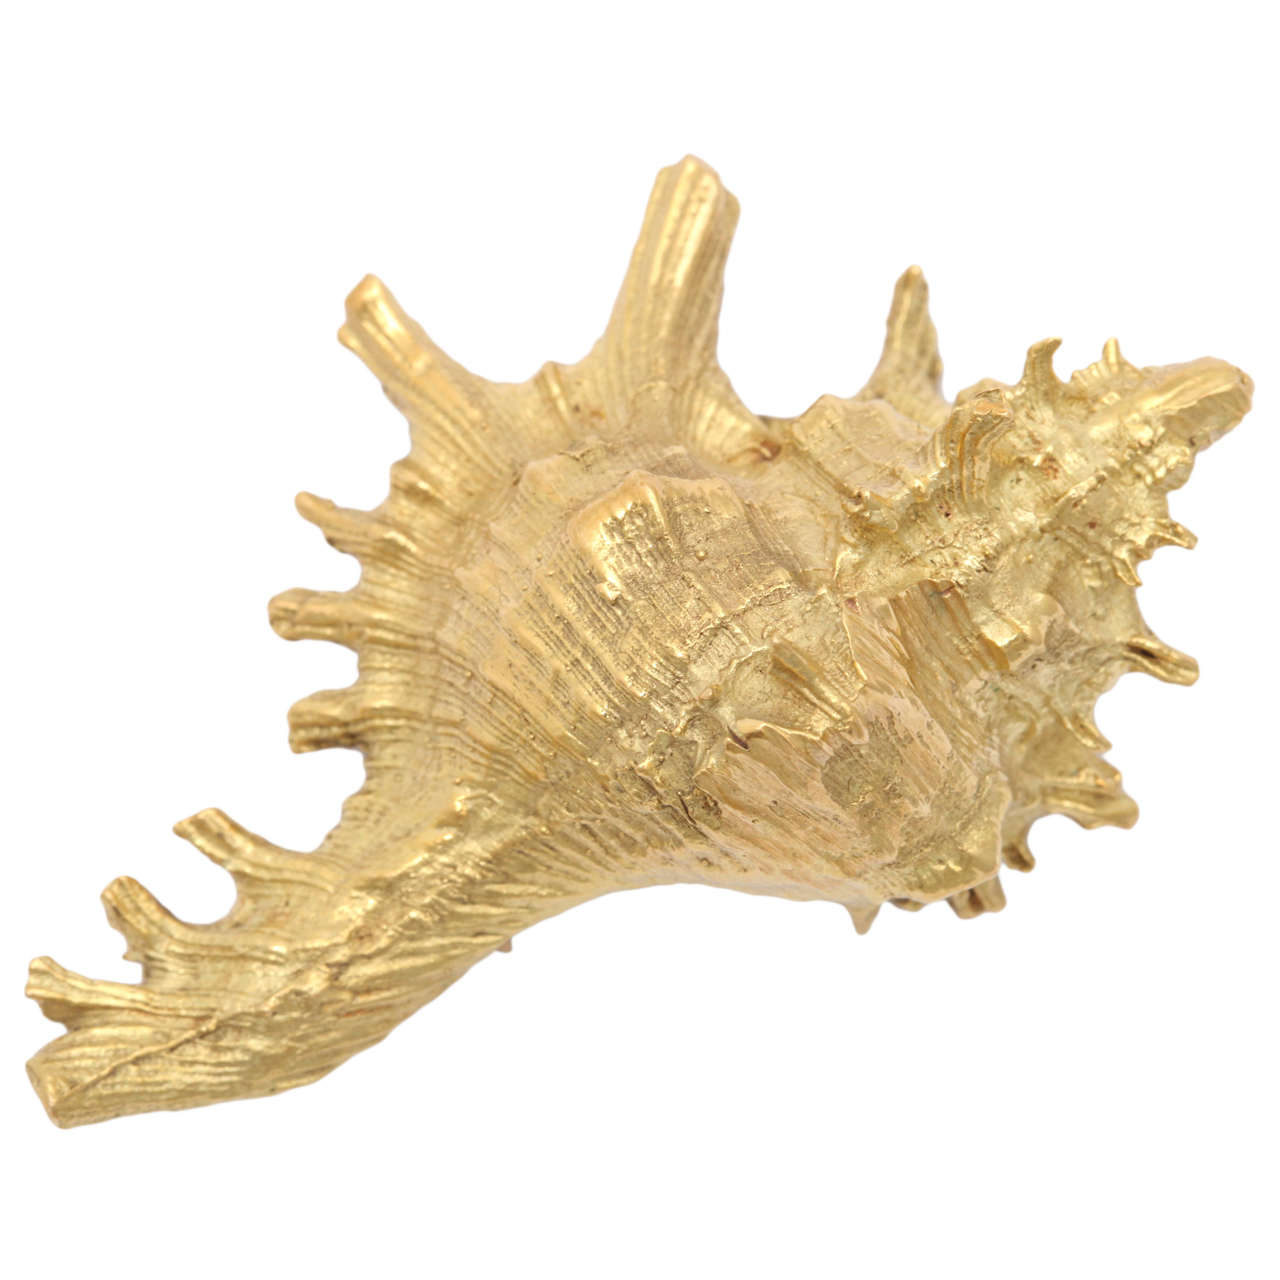 Impressive Gold Conch Shell Brooch